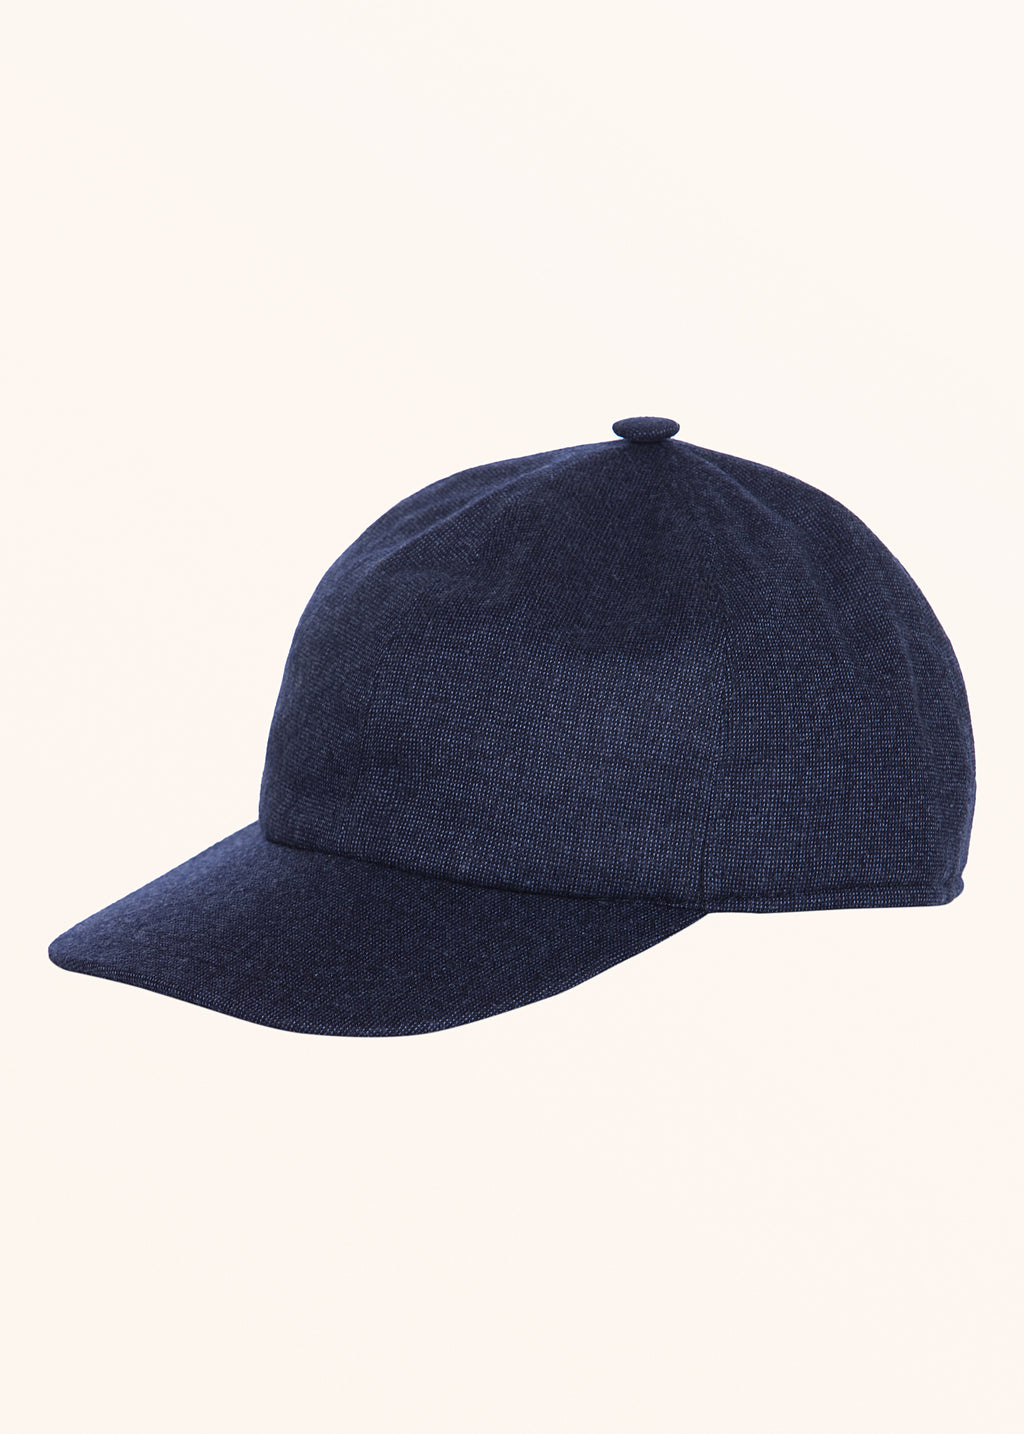 Hat Adjustable Baseball wool man, for Form – Kiton Europe virgin in